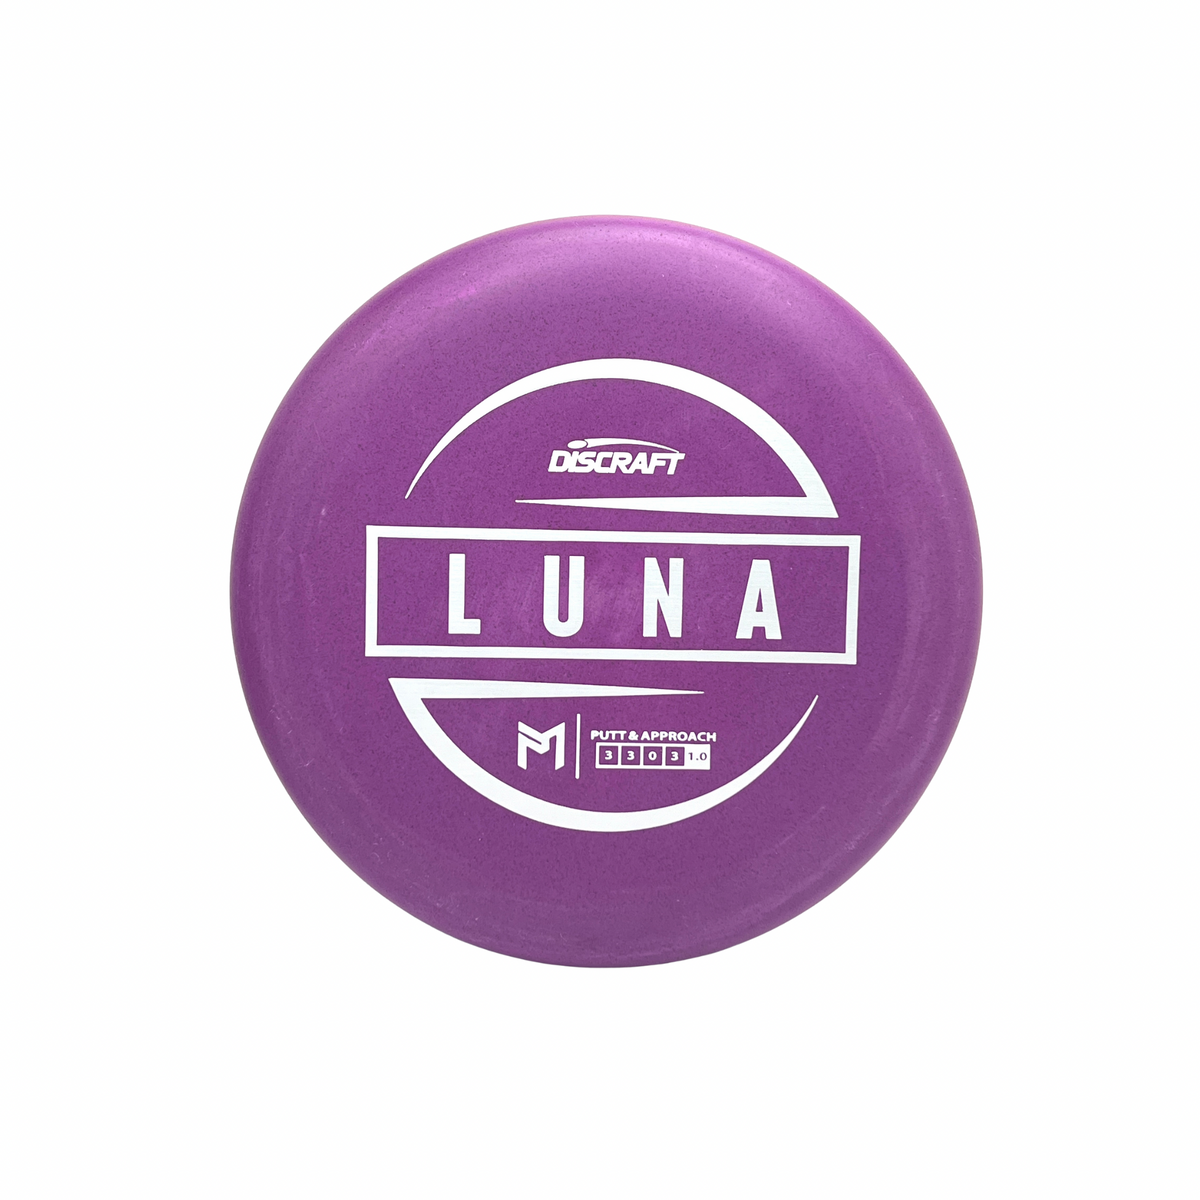 Luna-Paul McBeth